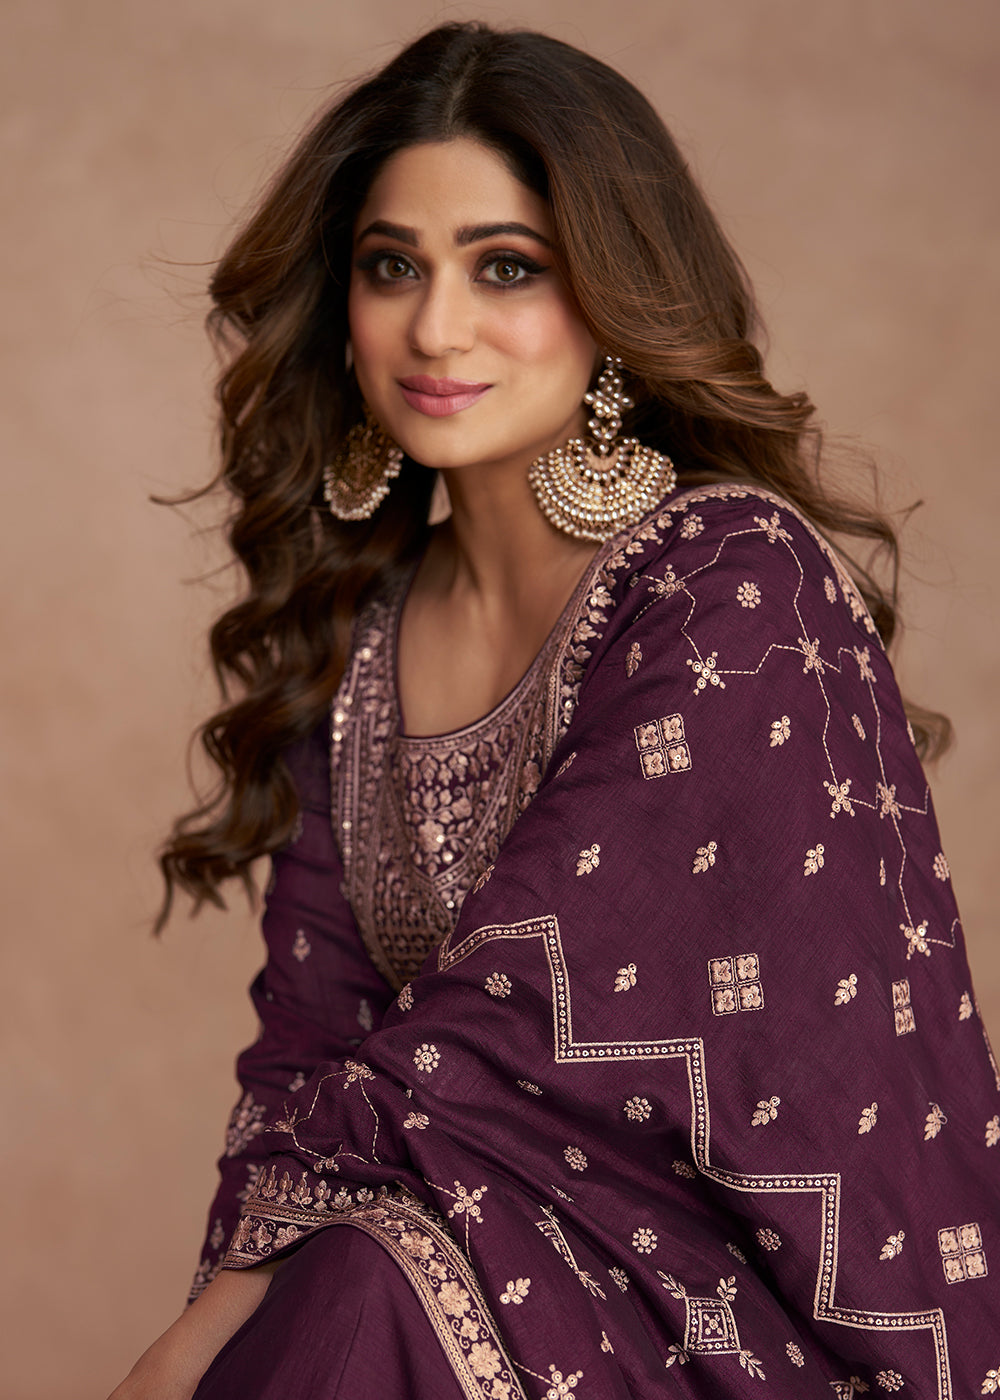 Buy Now Shamita Shetty Festive Luminous Purple Silk Anarkali Suit Online in USA, UK, Australia, New Zealand, Canada, Italy & Worldwide at Empress Clothing. 